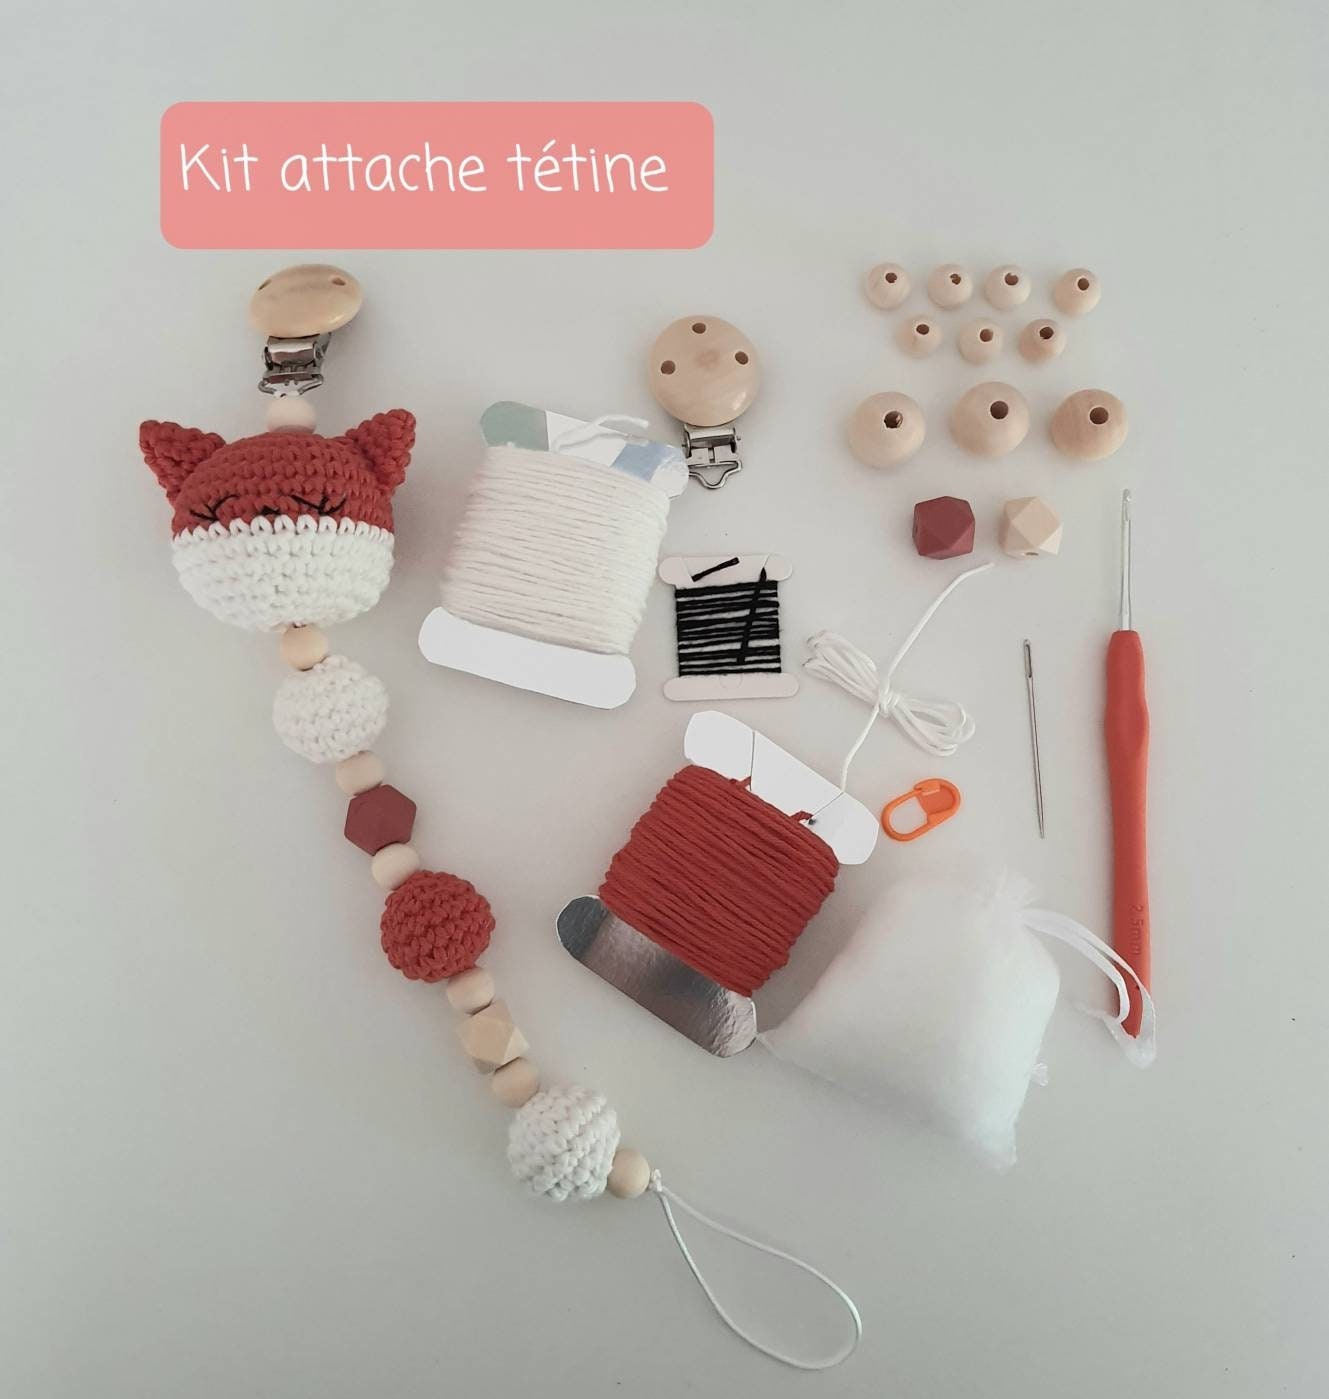 Kit attache tétine crochet renard, kit diy crochet renard, attache tétine  crochet renard -  France